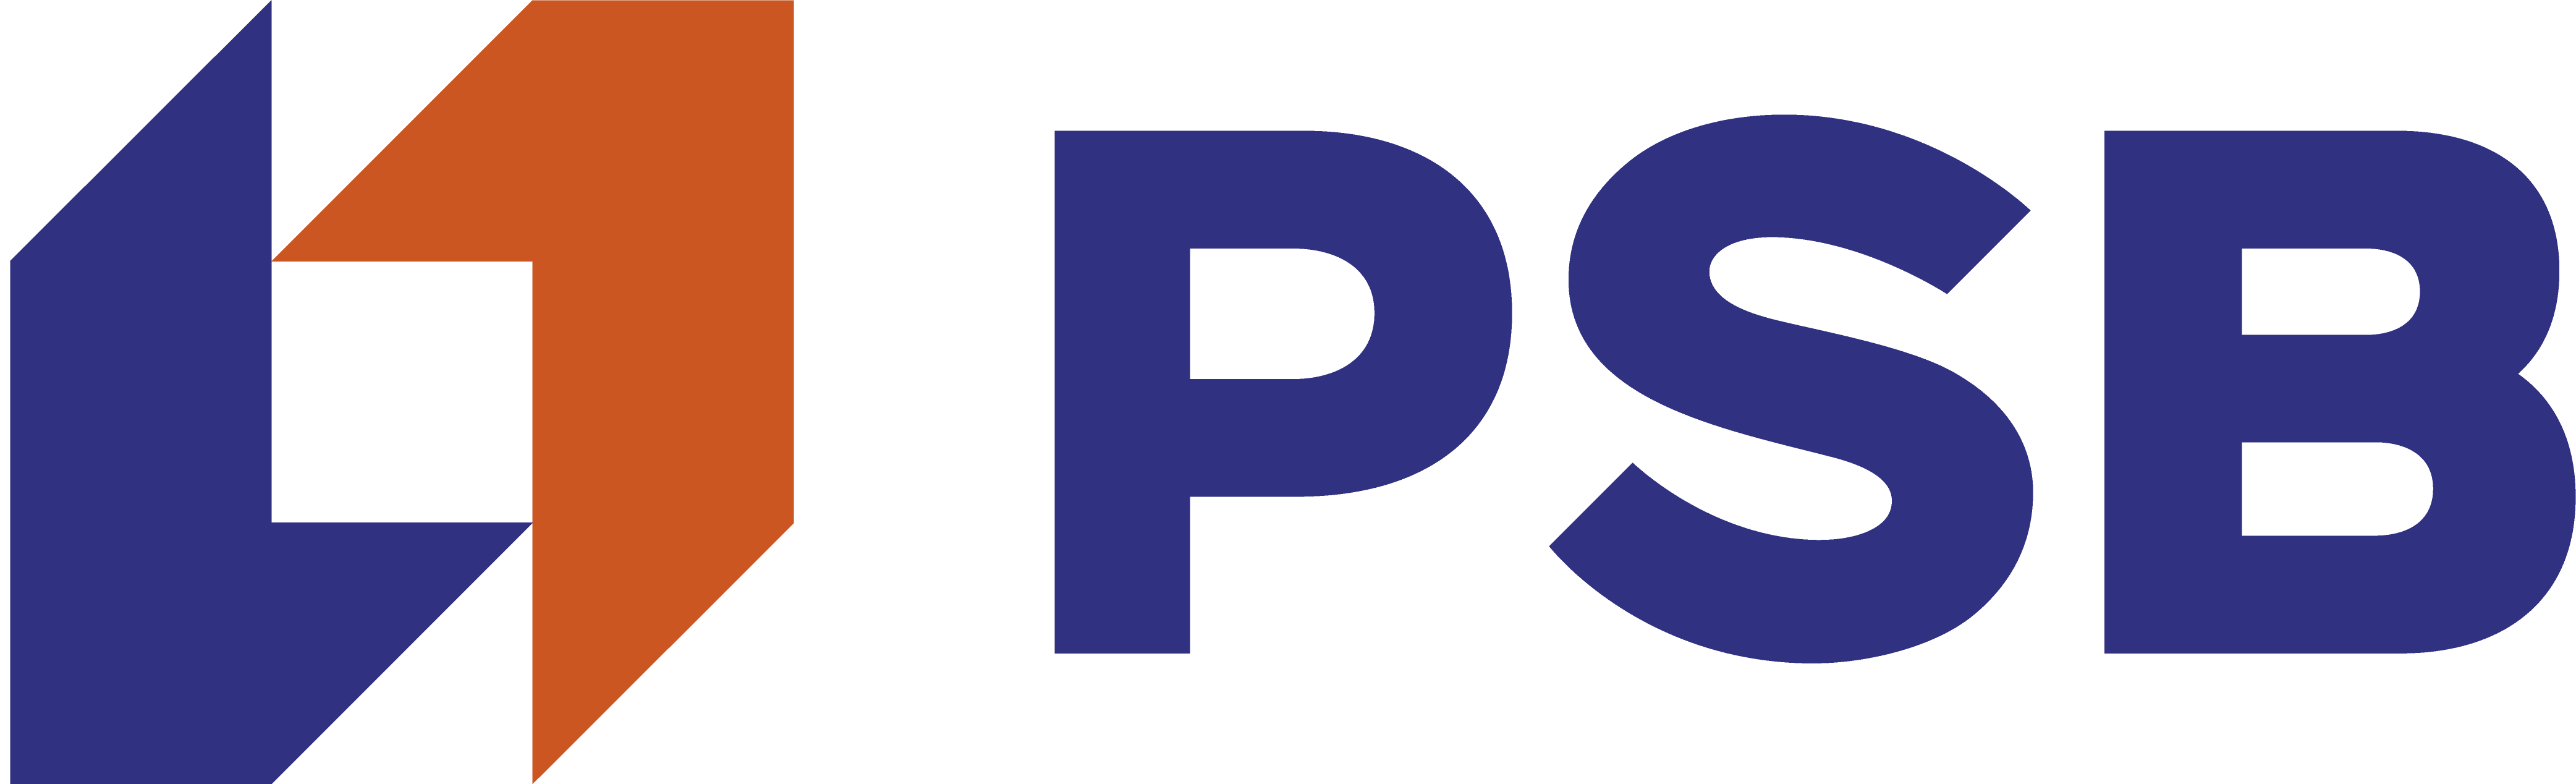 Промсвязьбанк psb corporate. ПСБ лого. Логотип PSB банк. ПСБ логотип новый. Значок банка ПСБ.